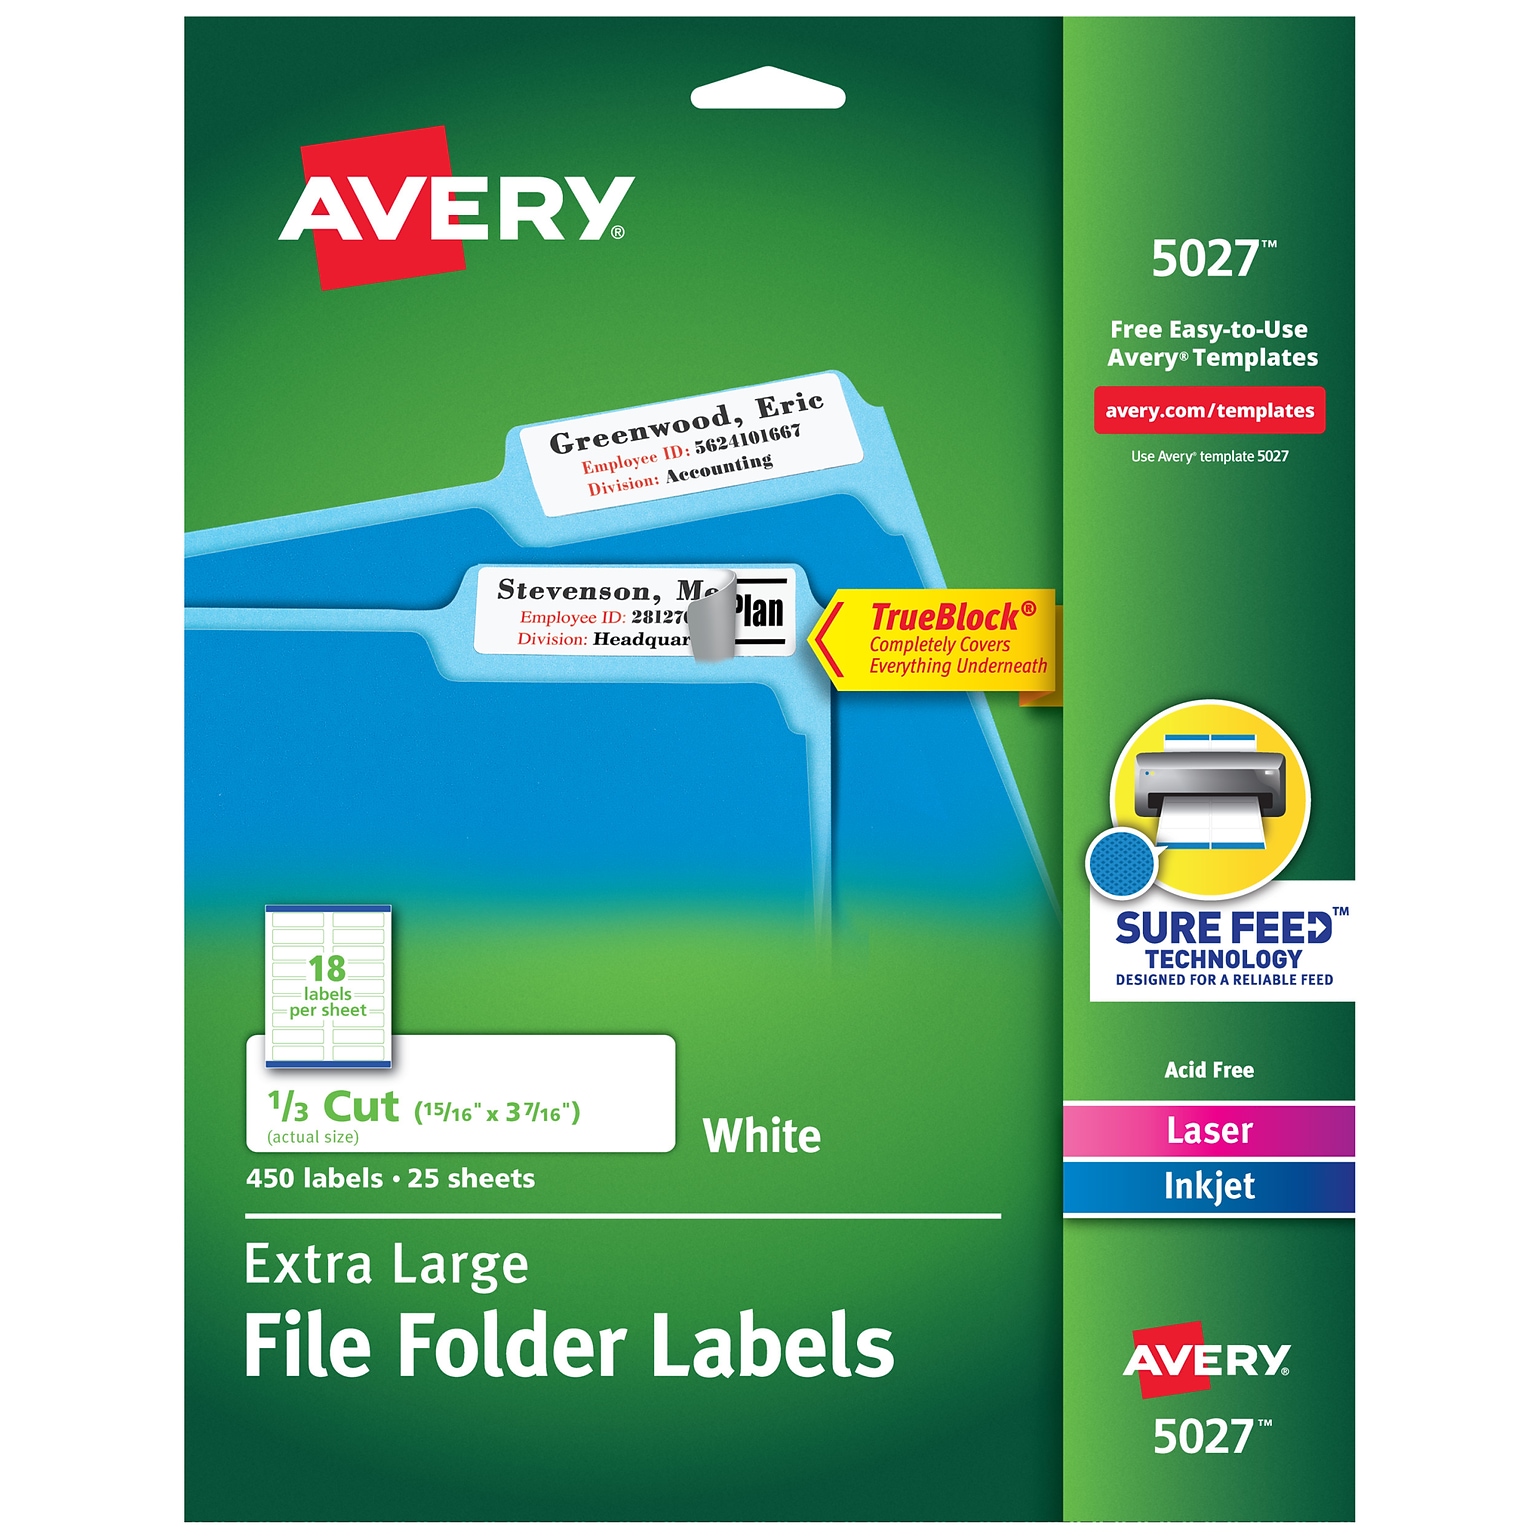 Avery Extra Large Laser/Inkjet File Folder Labels, 15/16 x 3 7/16, White, 450 Labels Per Pack (5027)